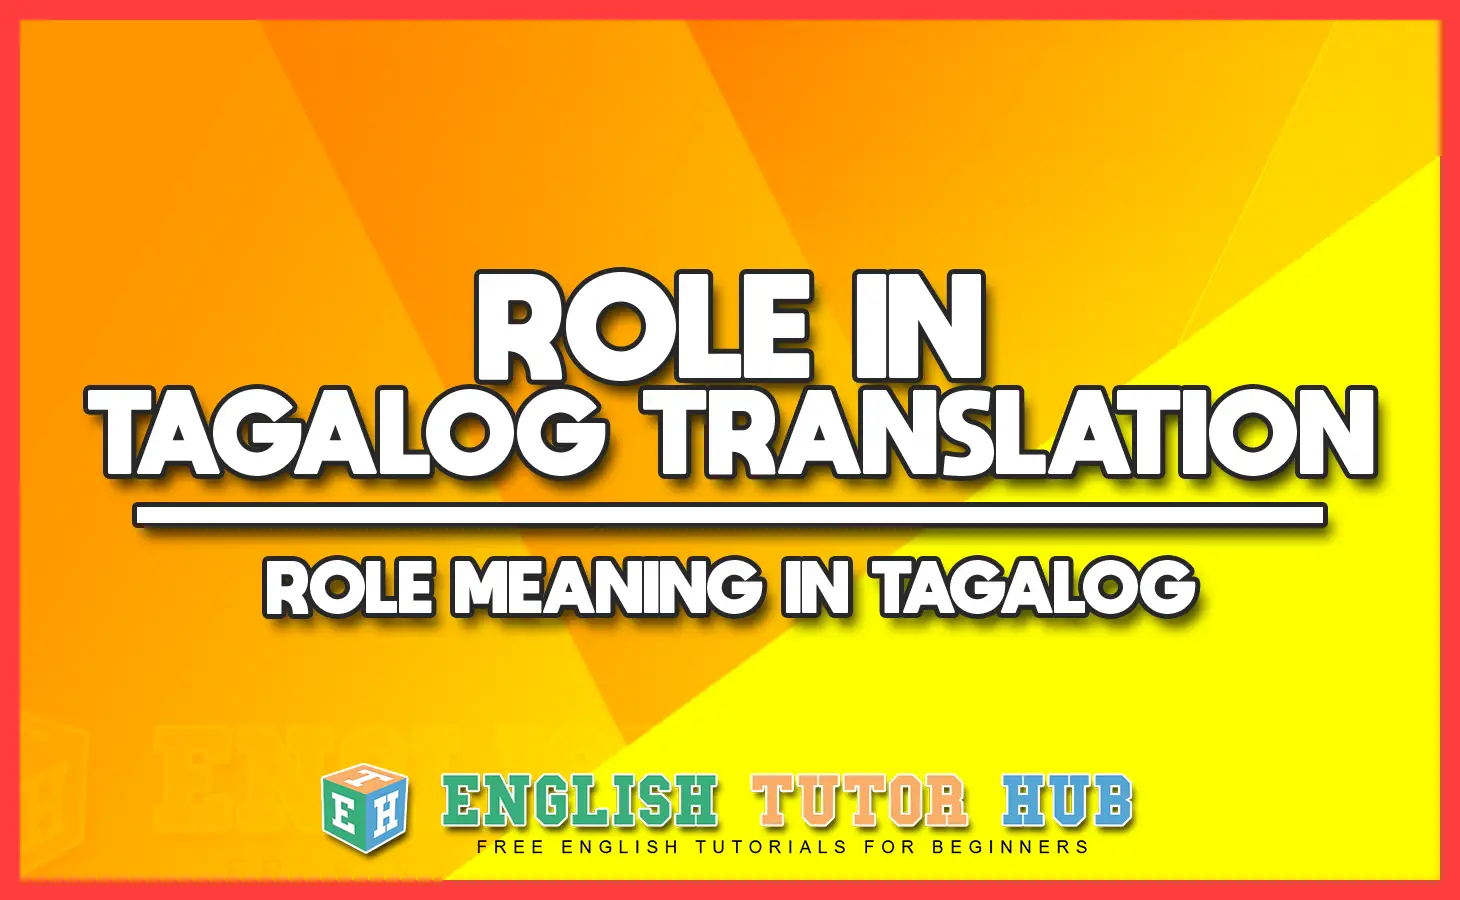 ROLE IN TAGALOG TRANSLATION